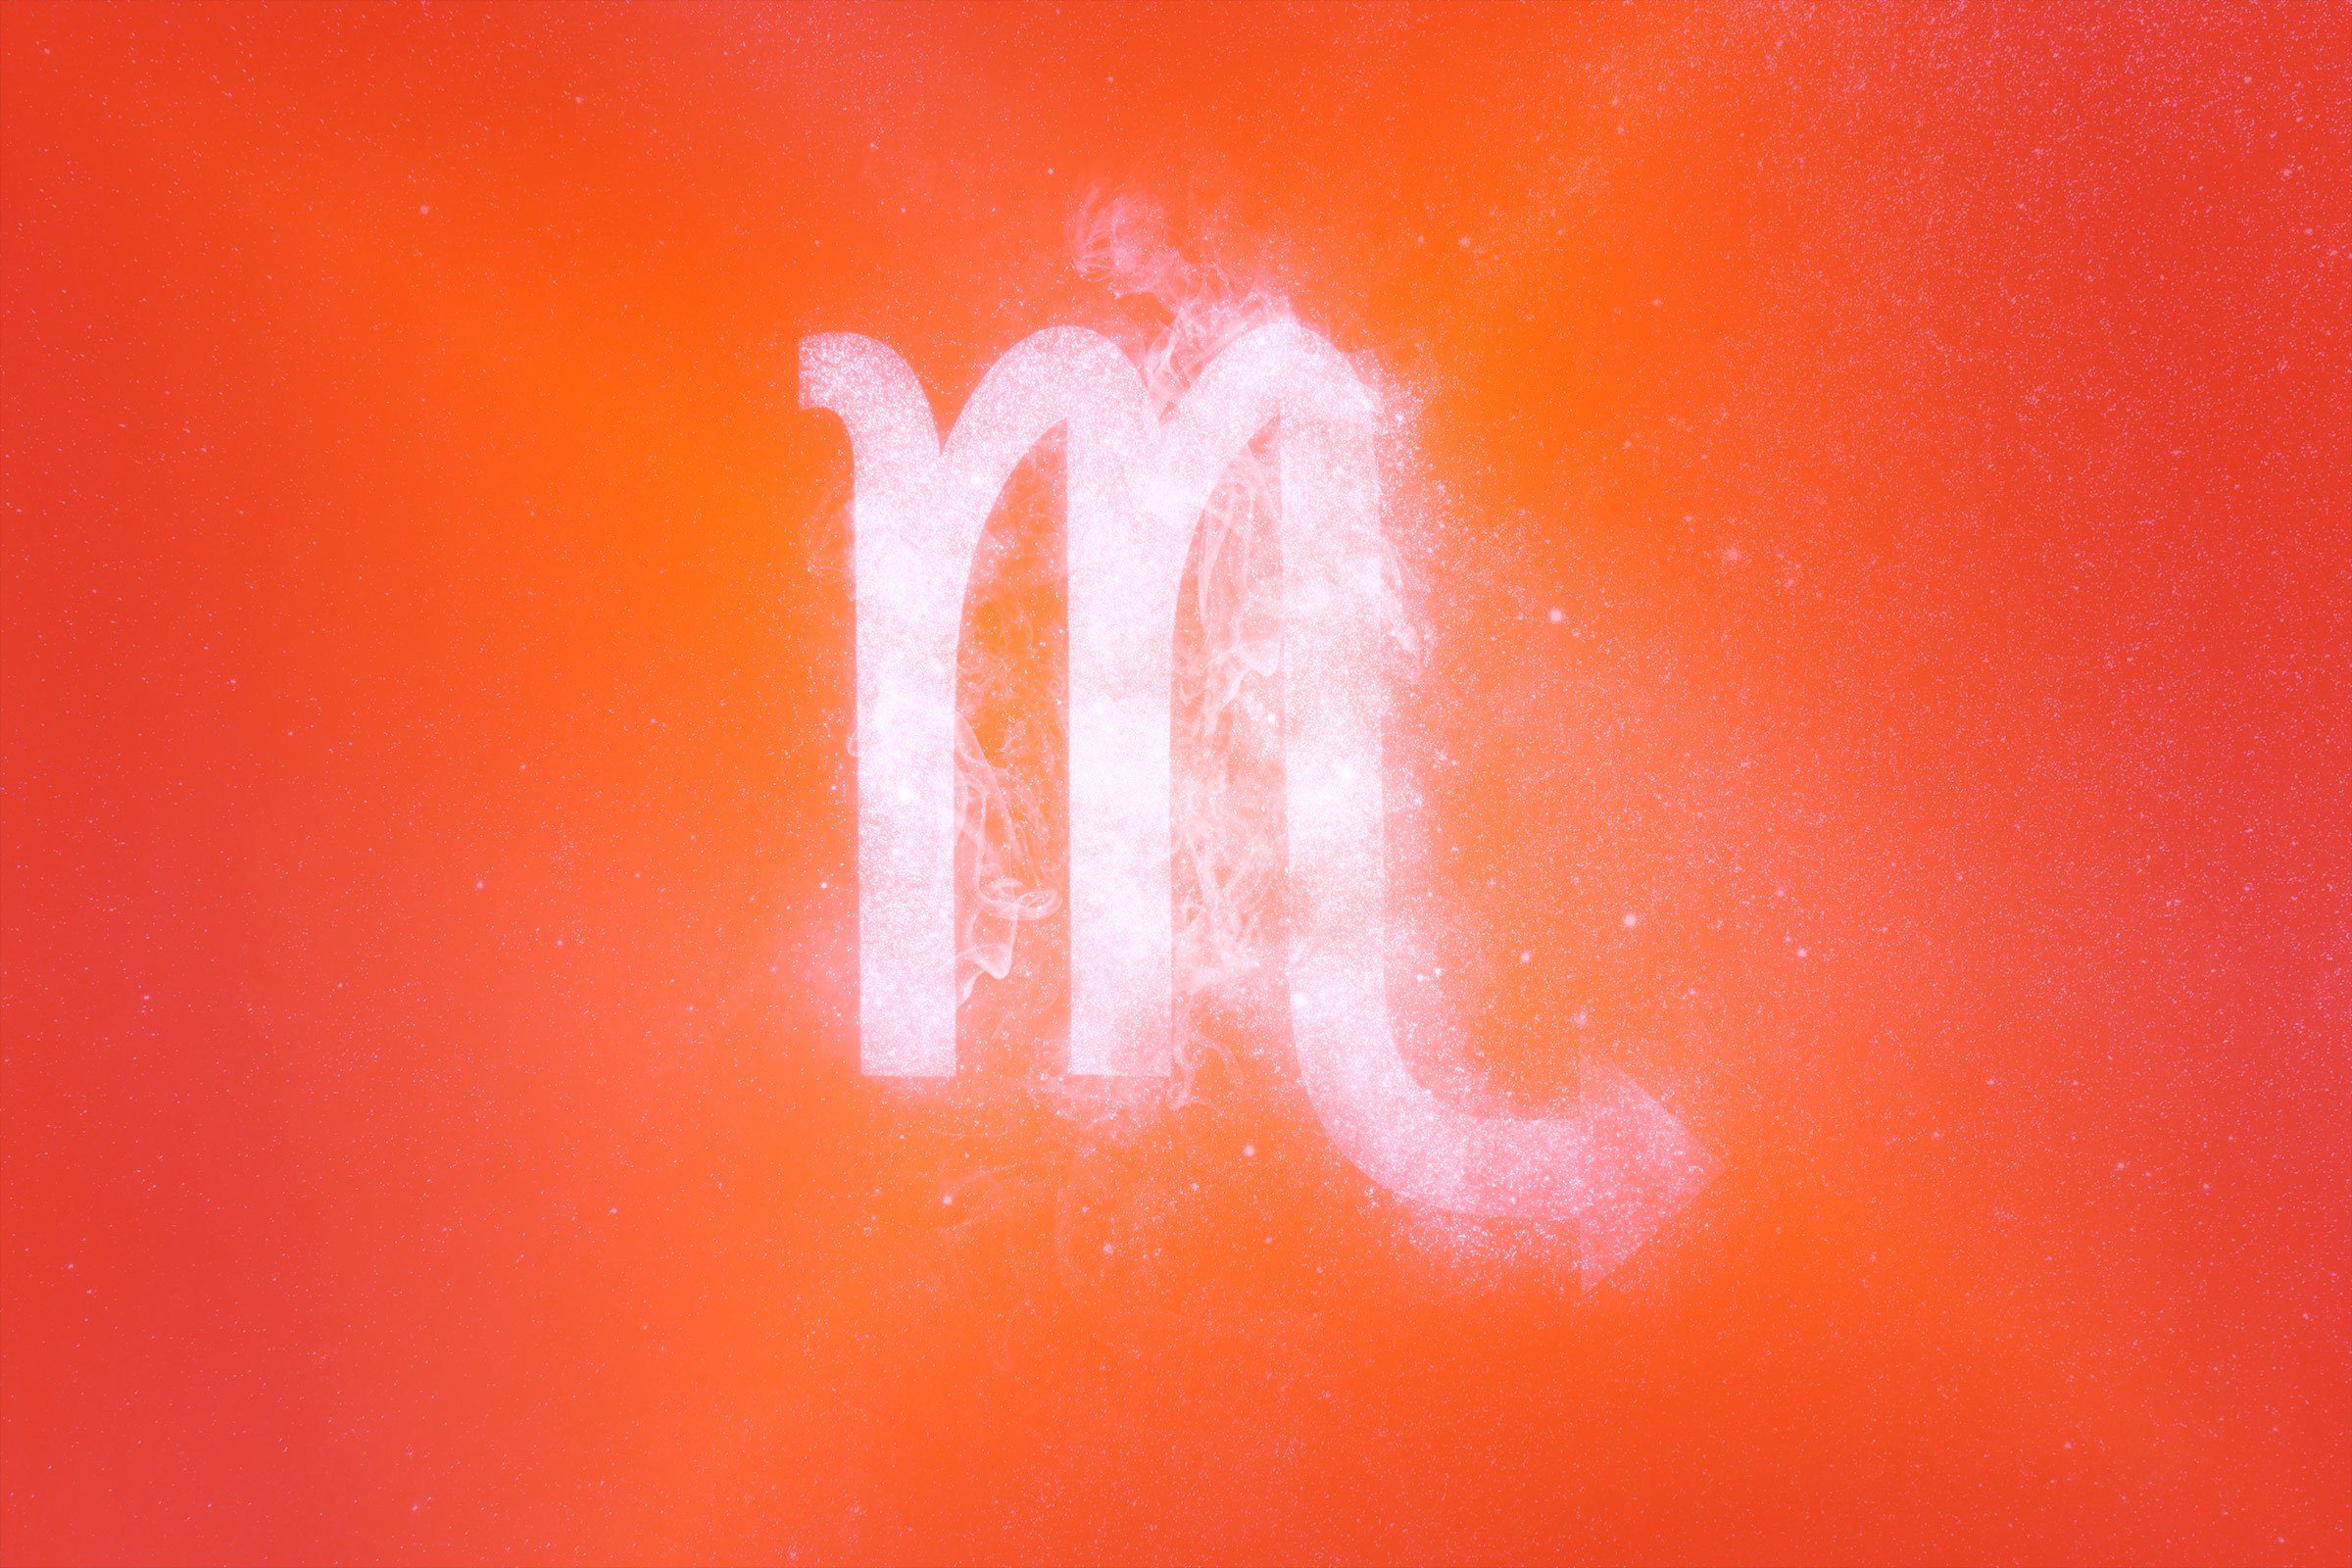 scorpio symbol with red-orange gradient overlay